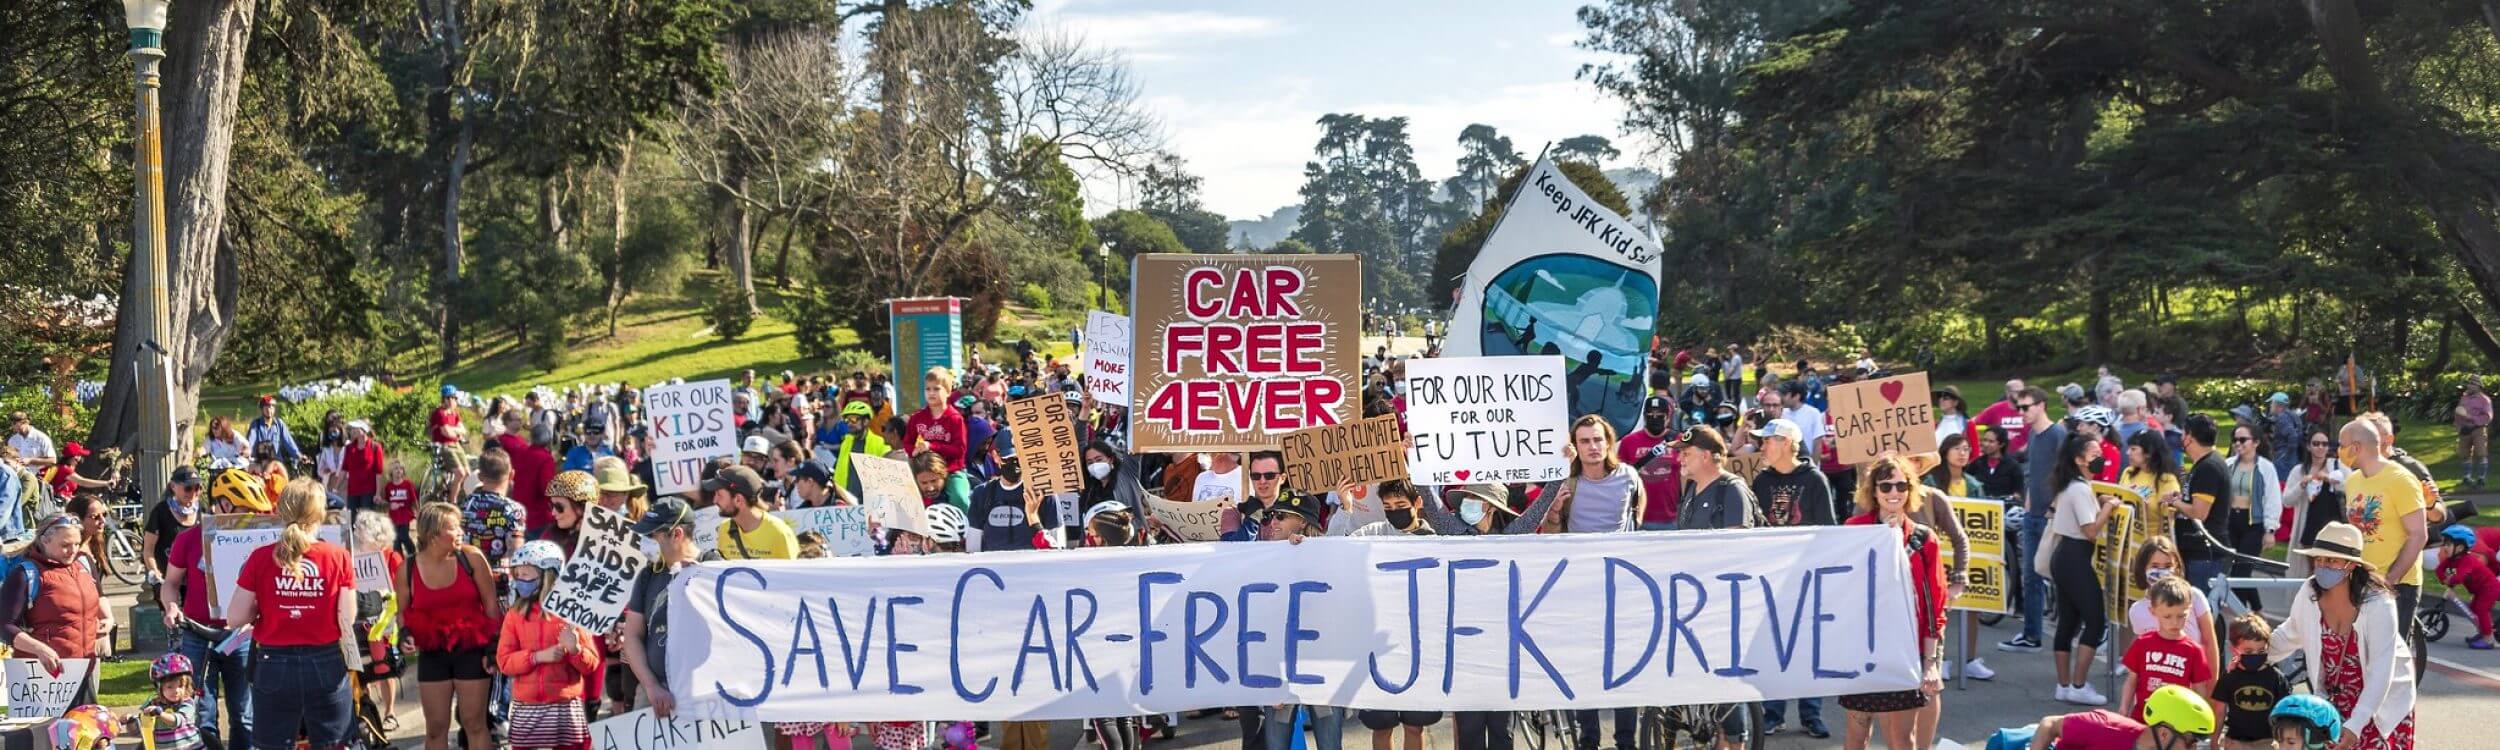 Ballot measure would take away car-free JFK – but we won’t let it win